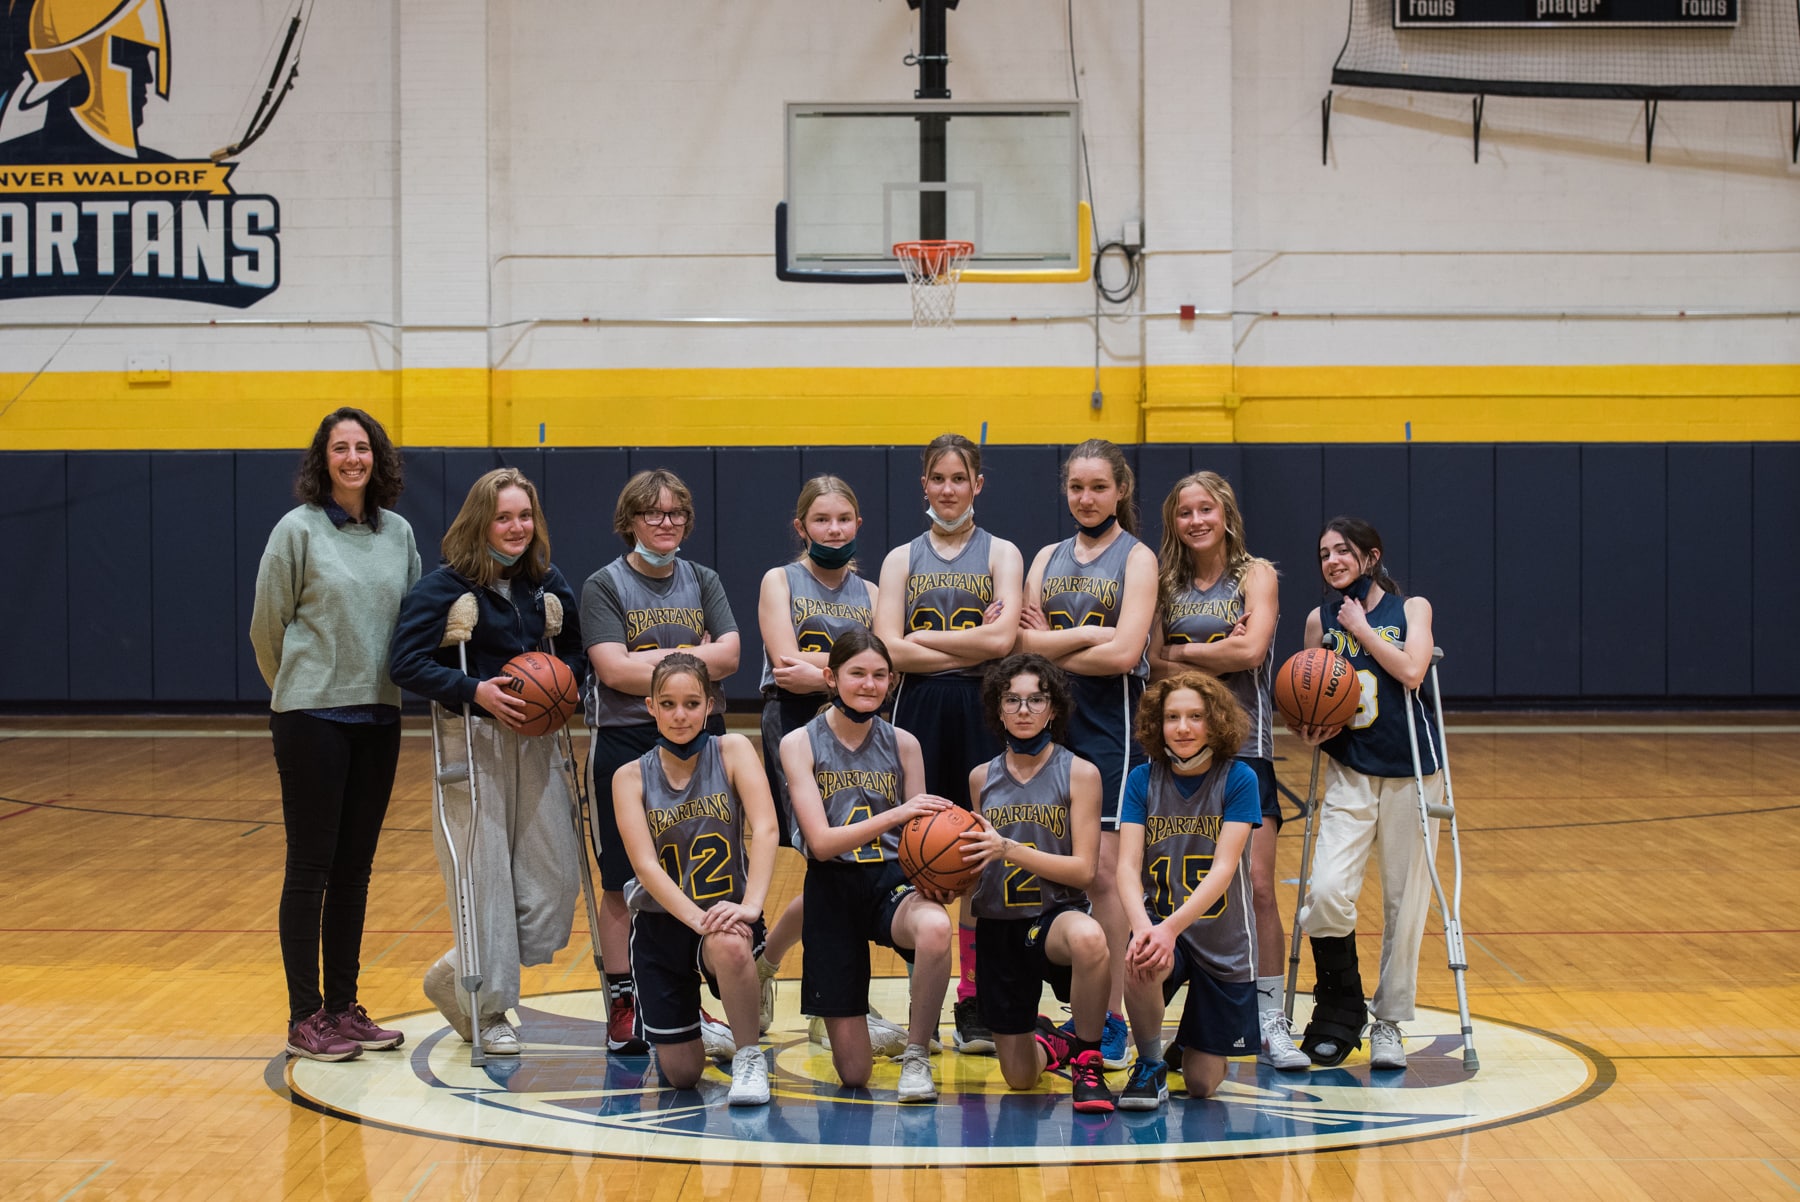 denver waldorf middle school girls basketball team 2021